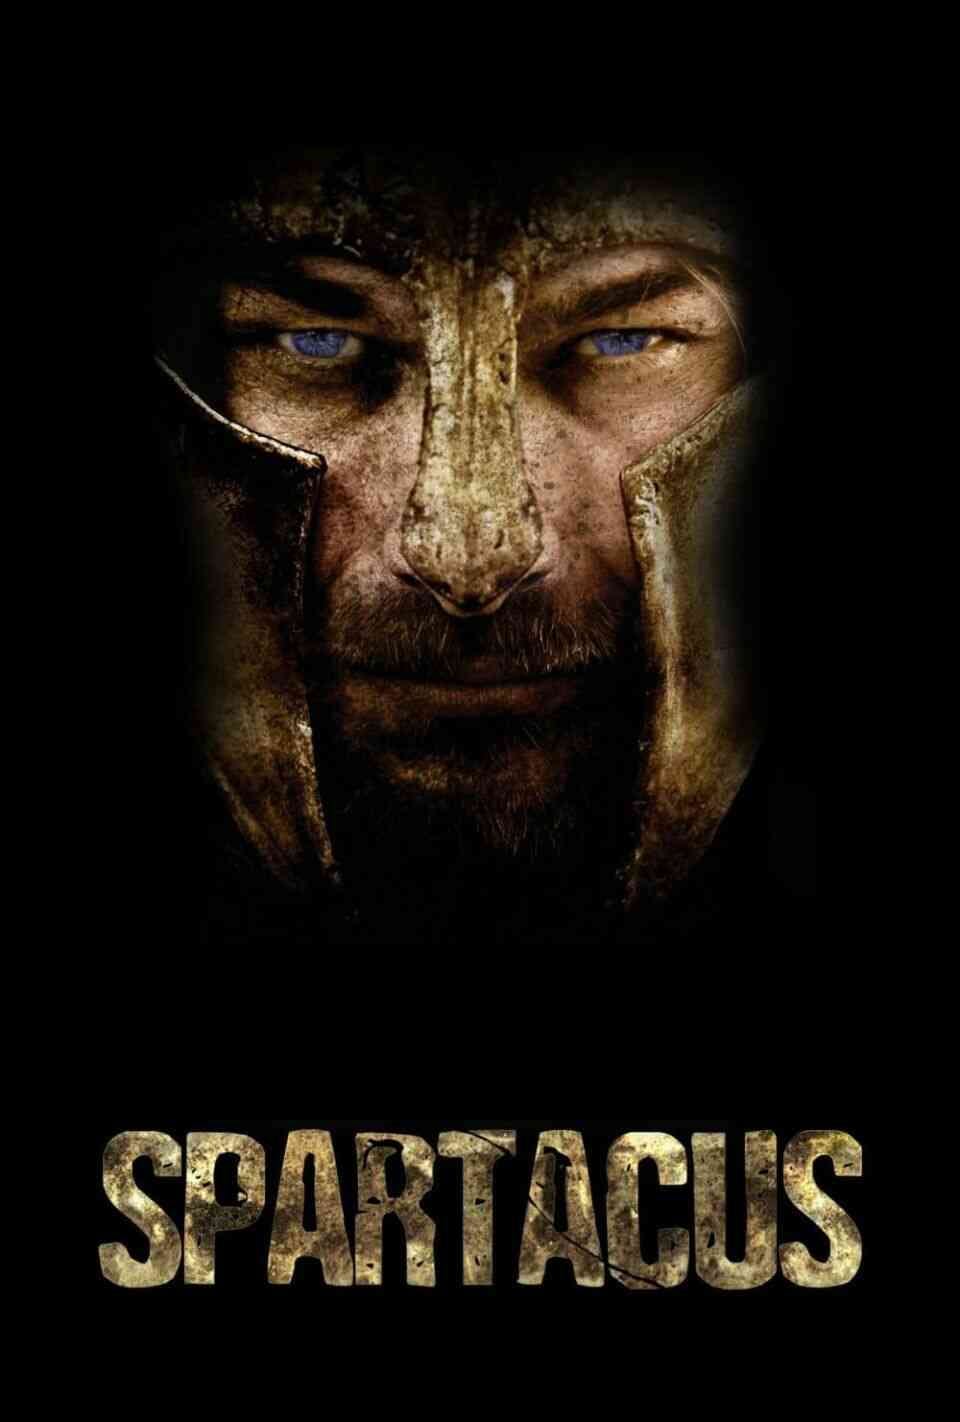 Read Spartacus screenplay.